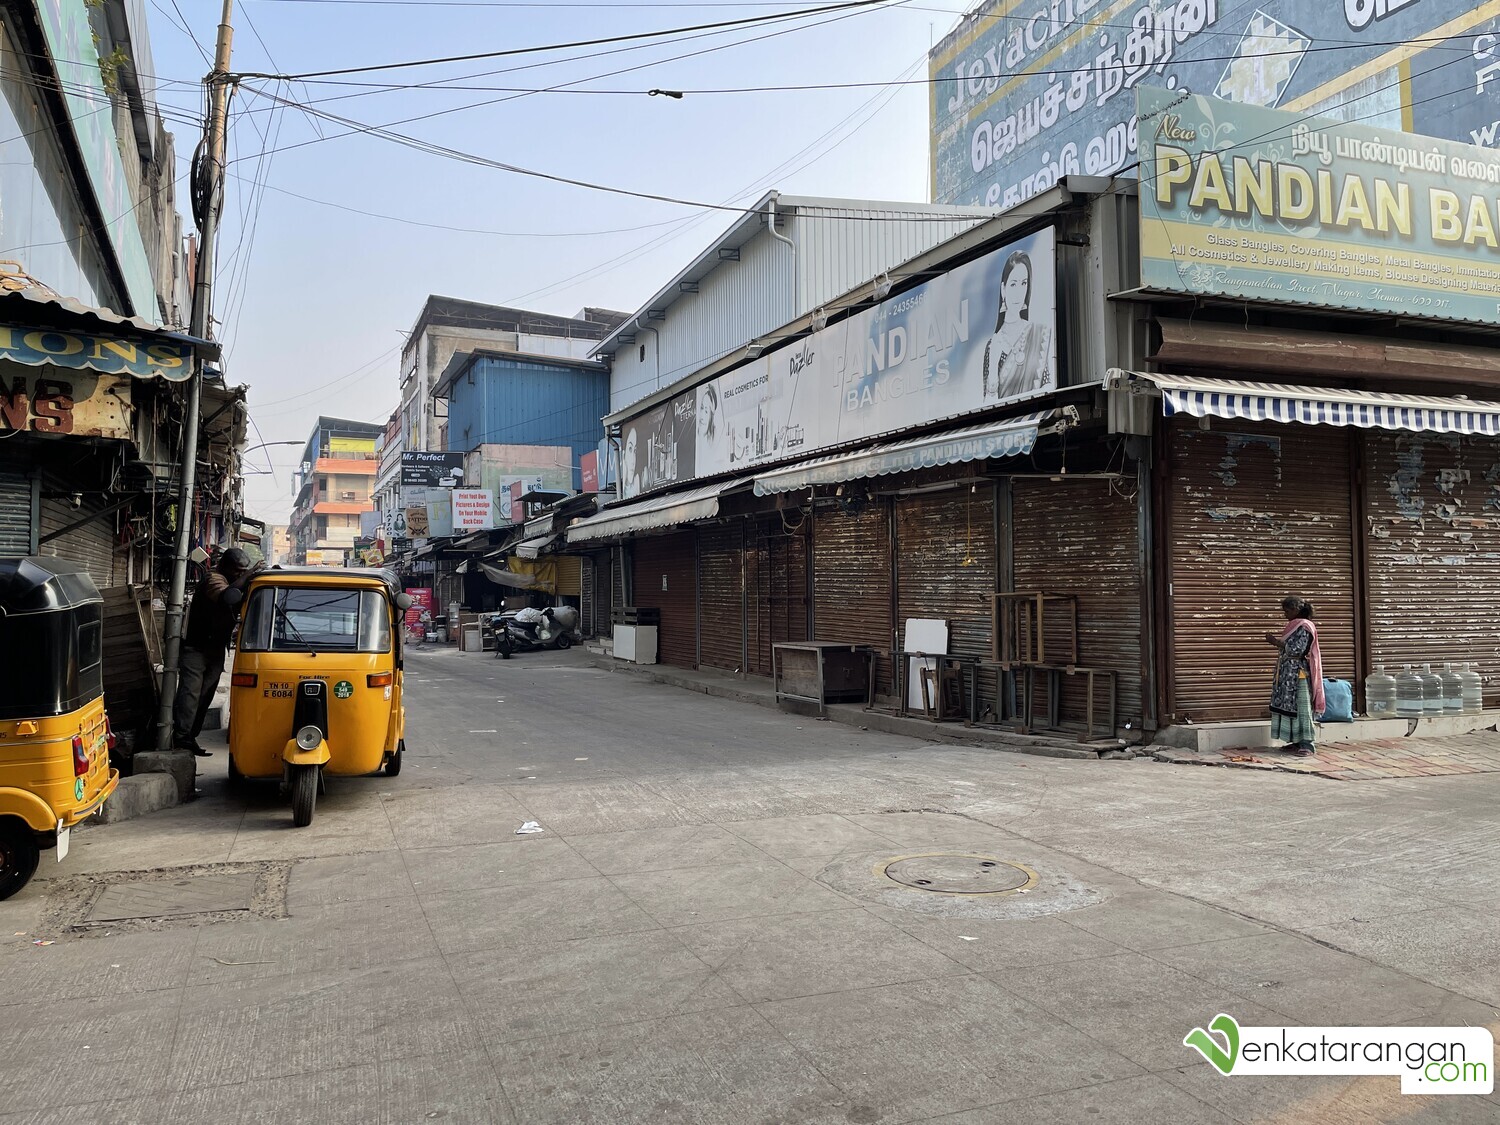 View of Rameswaram Street